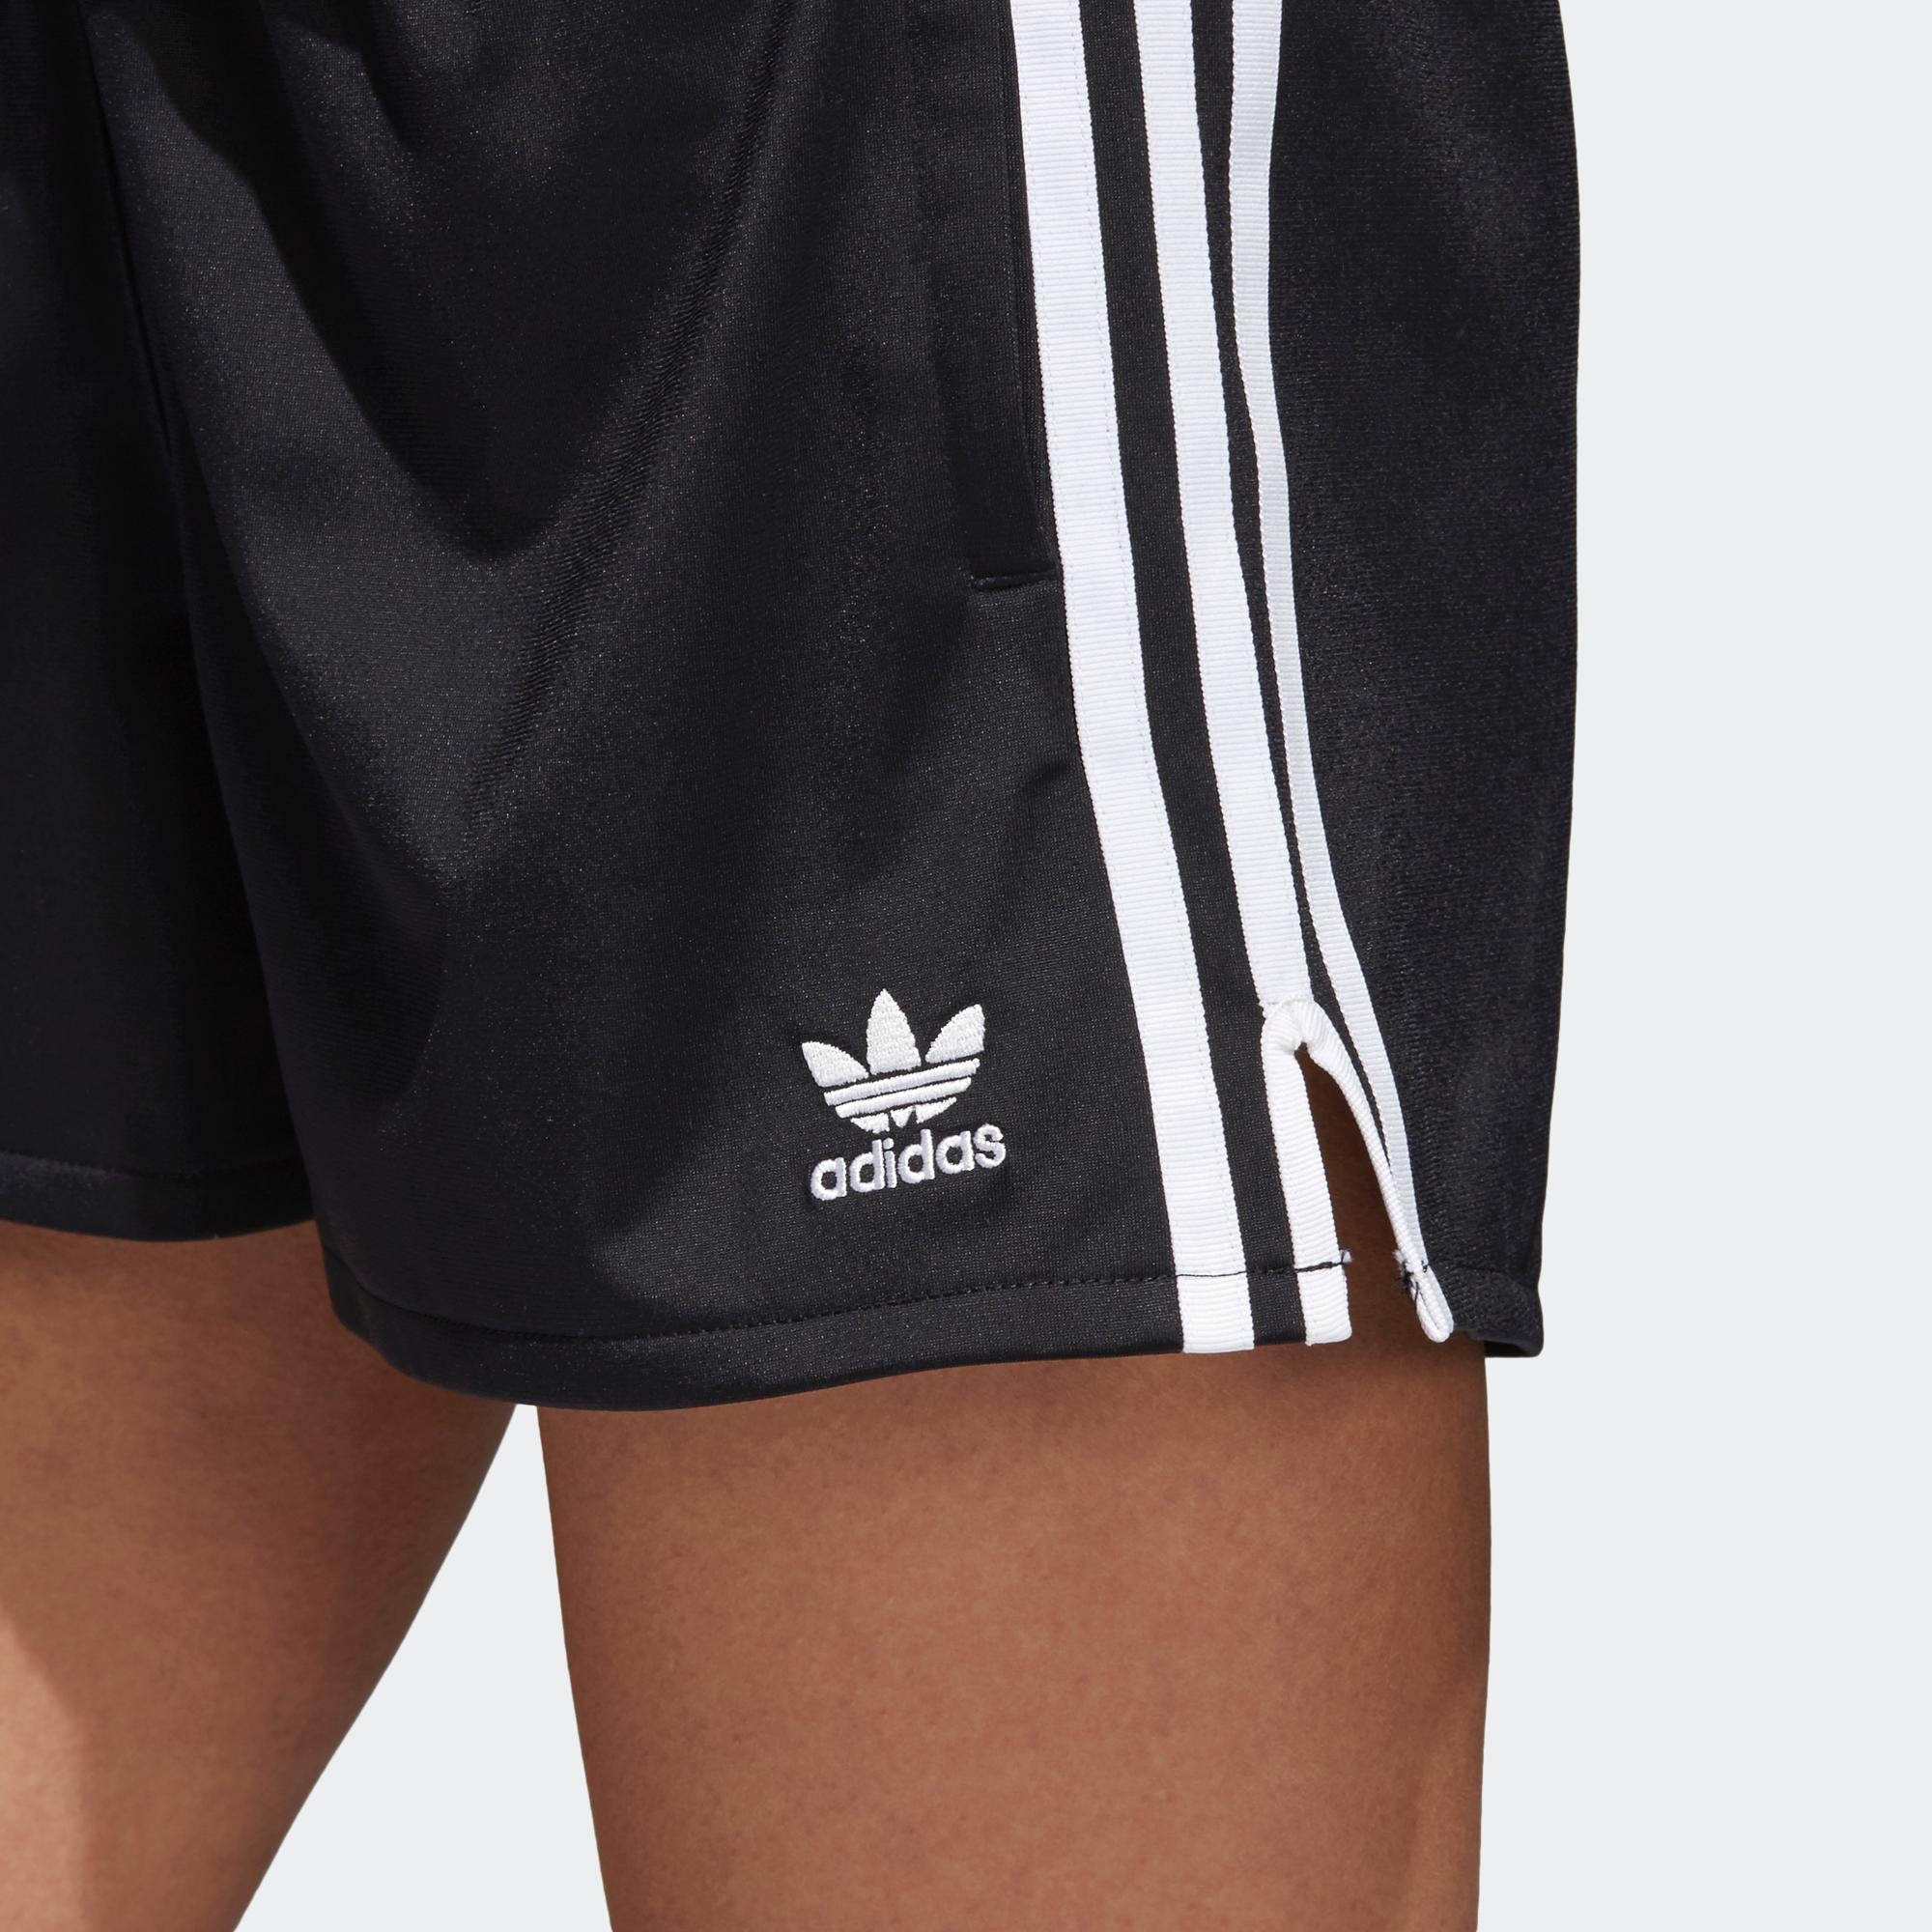 tradesports.co.uk Adidas Women's Adicolor 3 Stripe Shorts CY4763